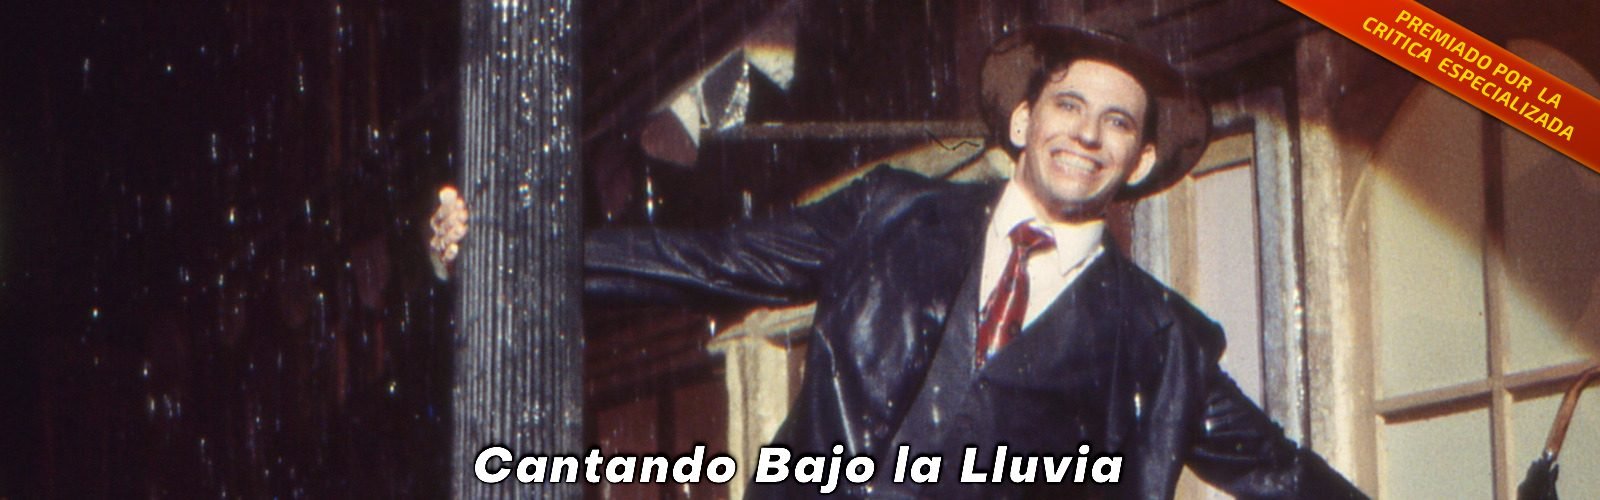 SLIDE CANTANDO BAJO LA LLUVIA